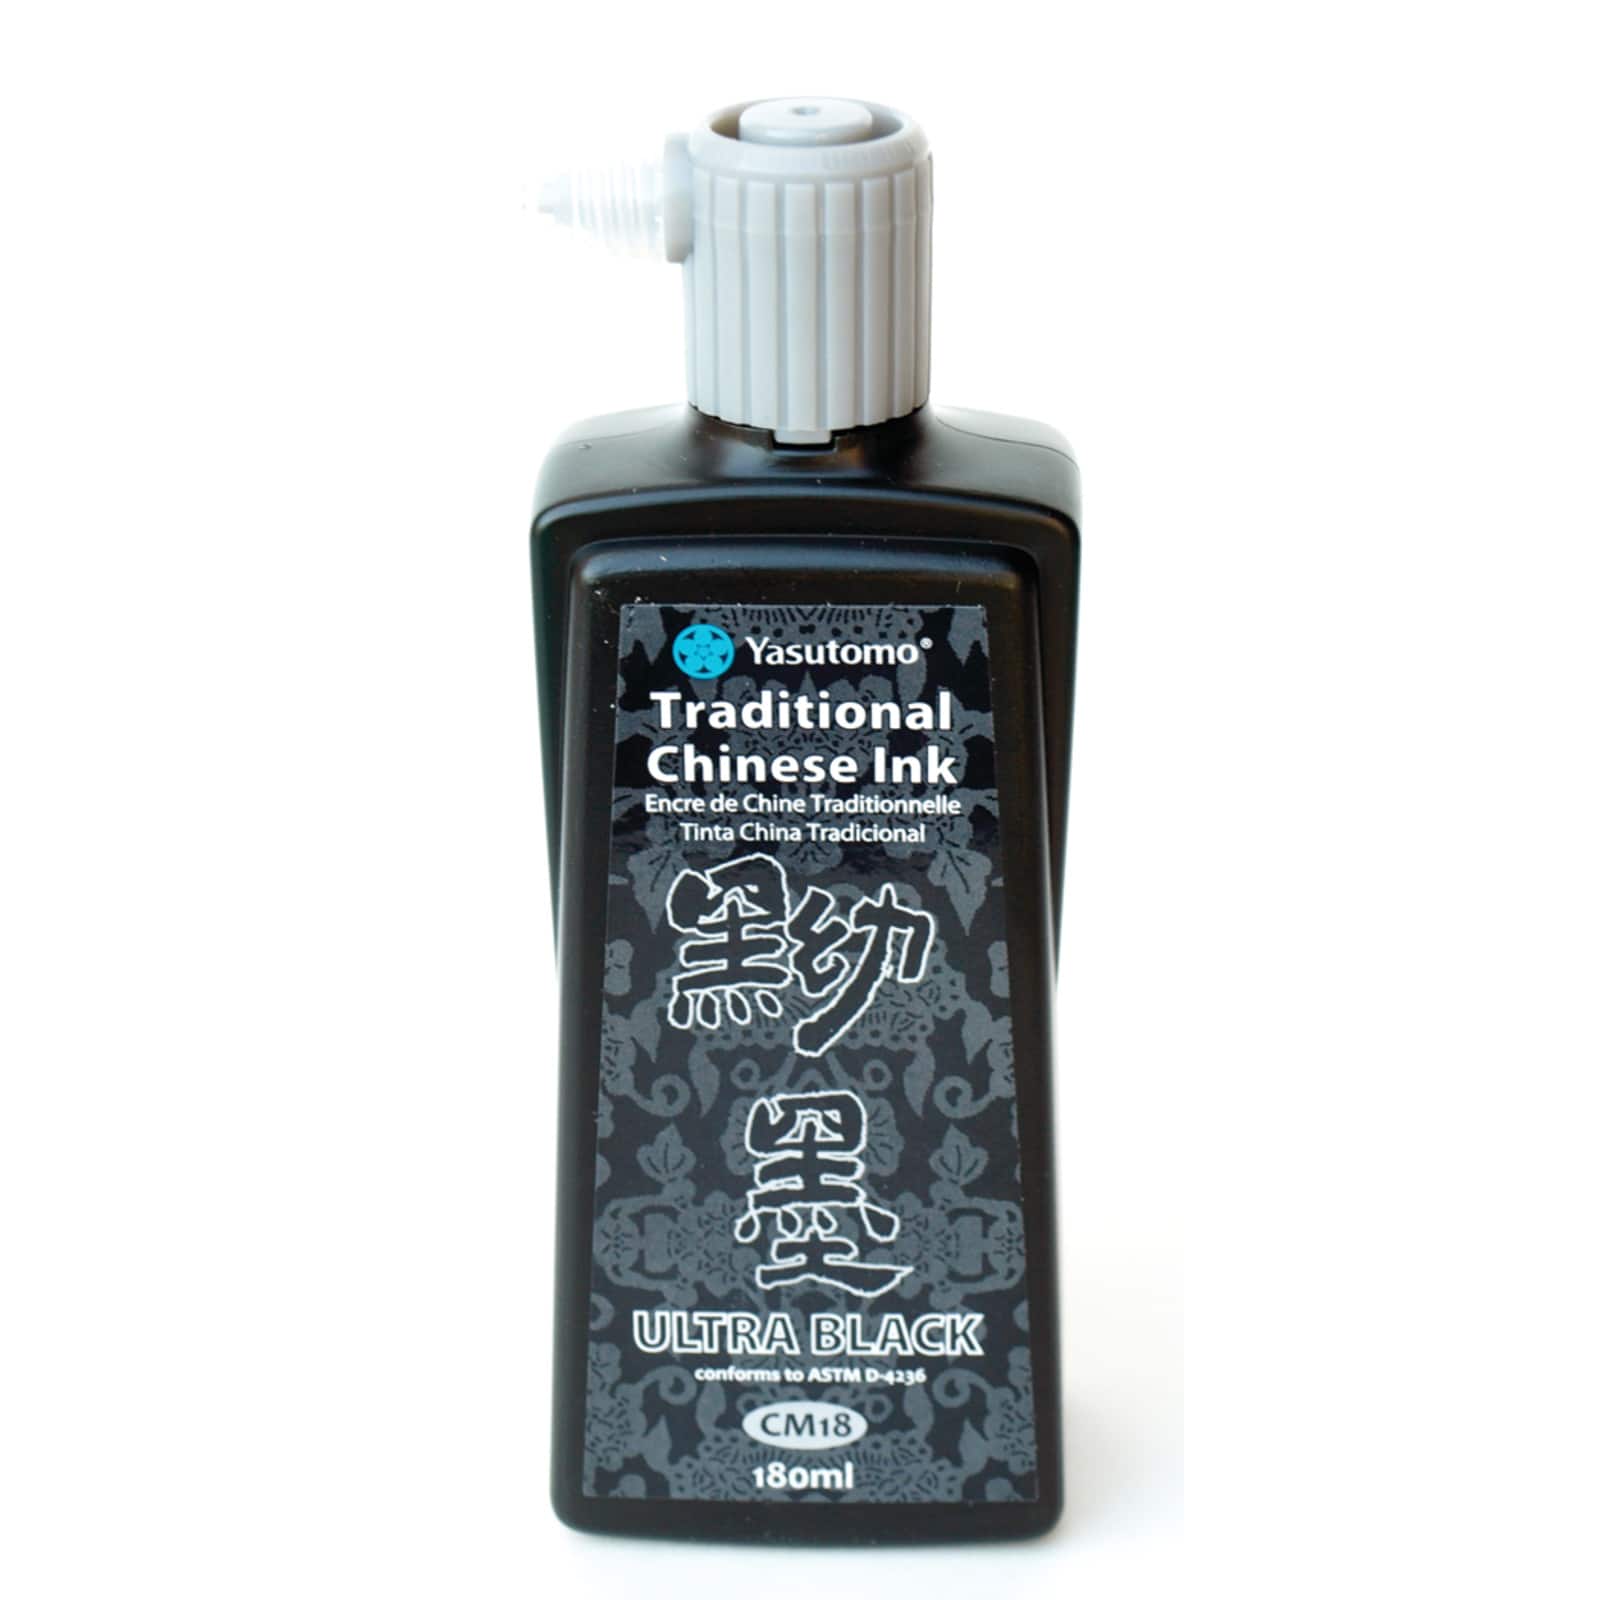 Yasutomo® Traditional Chinese Ink, 180mL